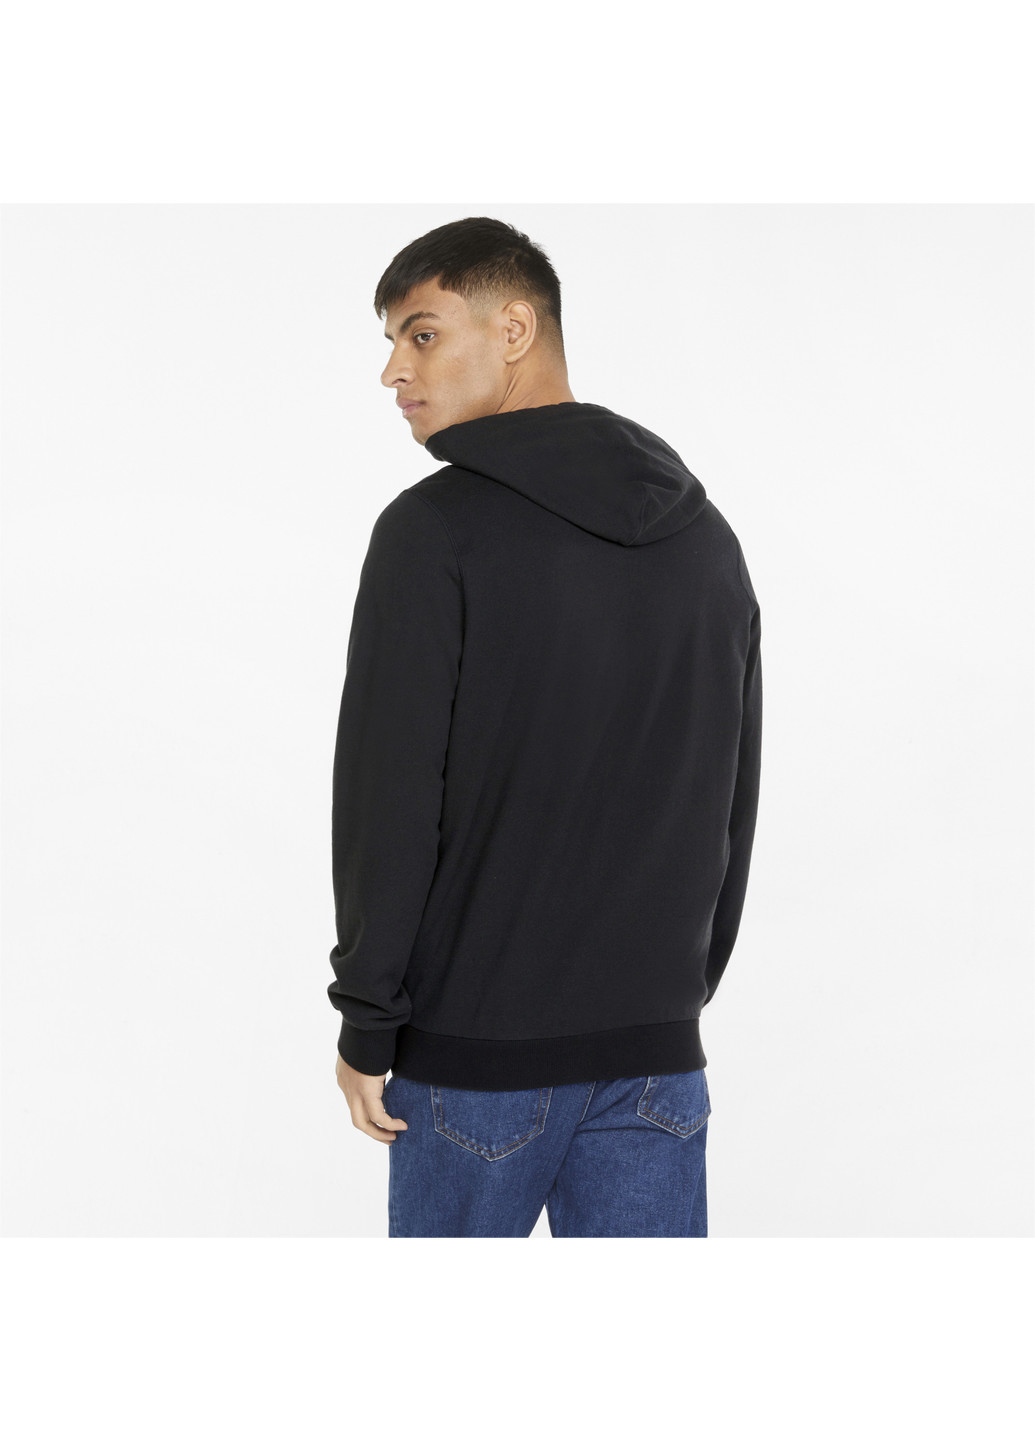 Черная демисезонная толстовка modern basics full-zip men's hoodie Puma